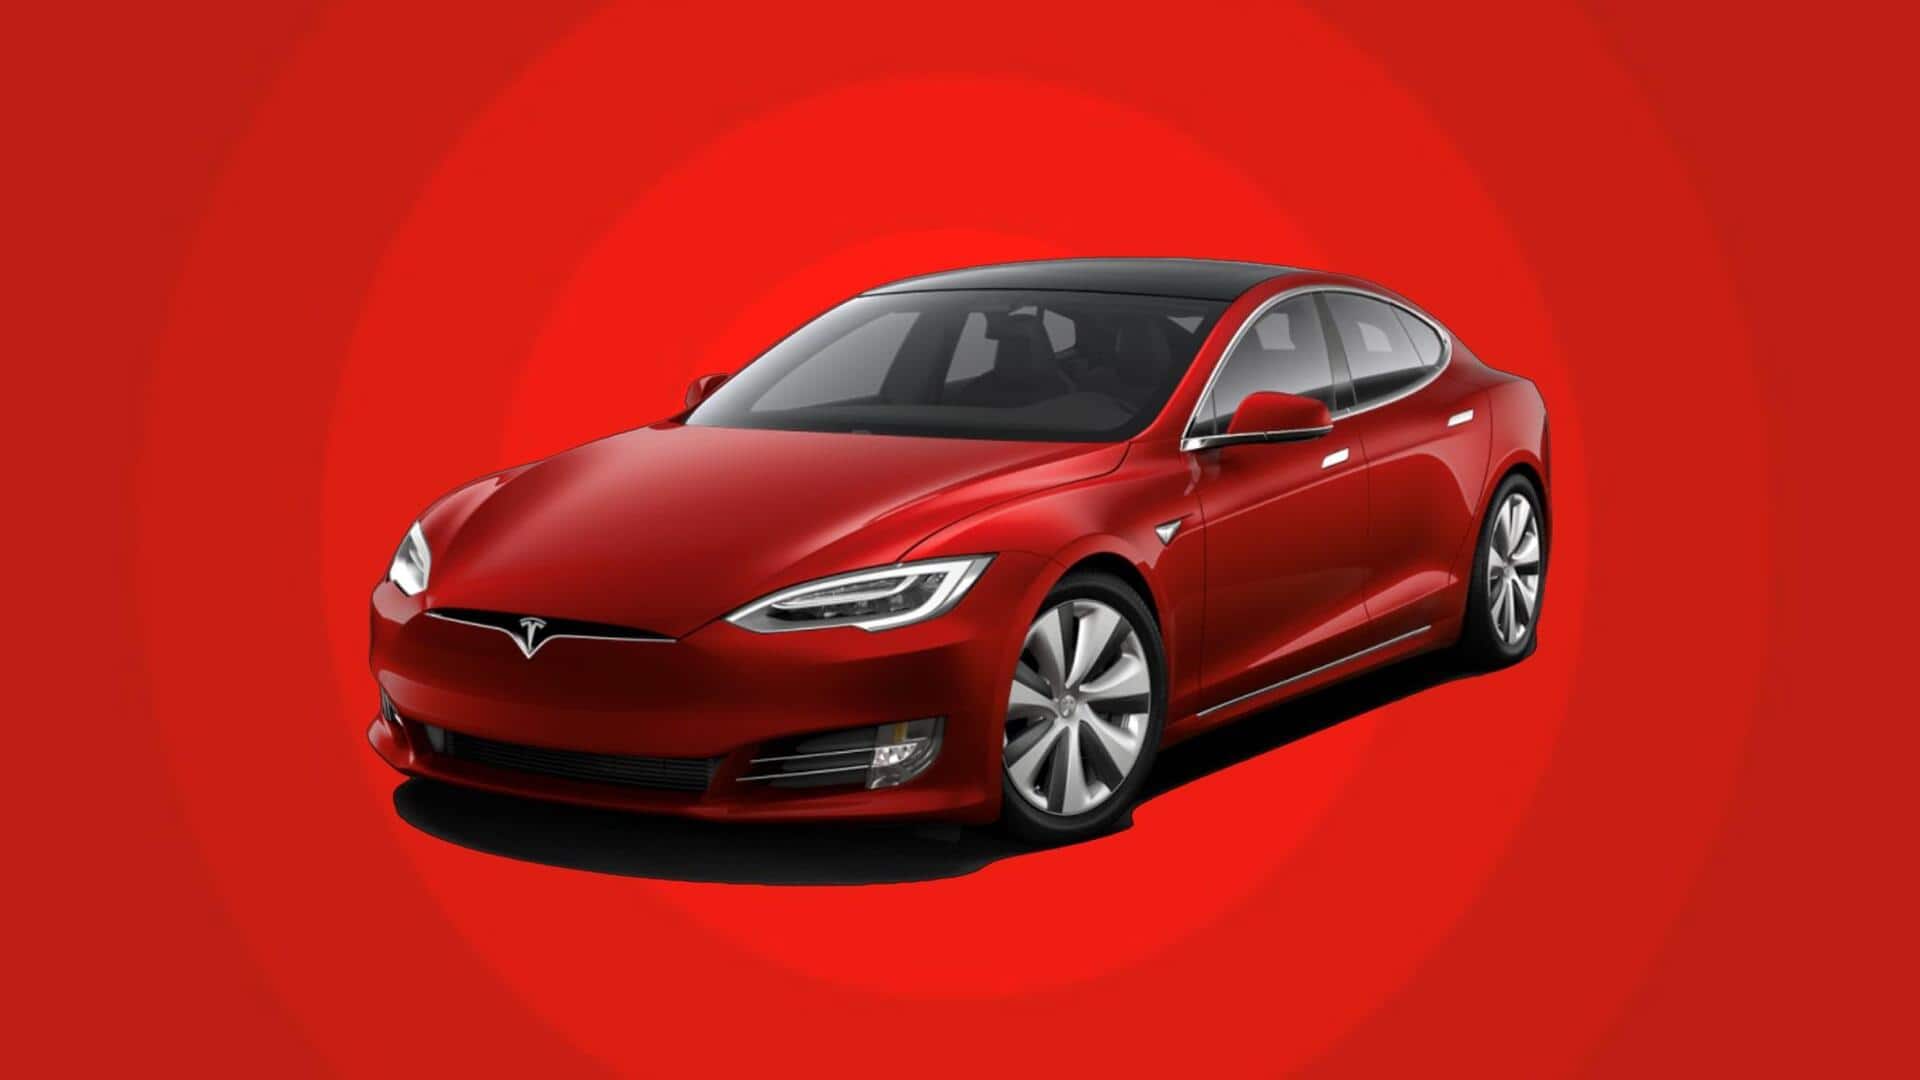 India slashes EV import taxes, boosting Tesla's market entry plans